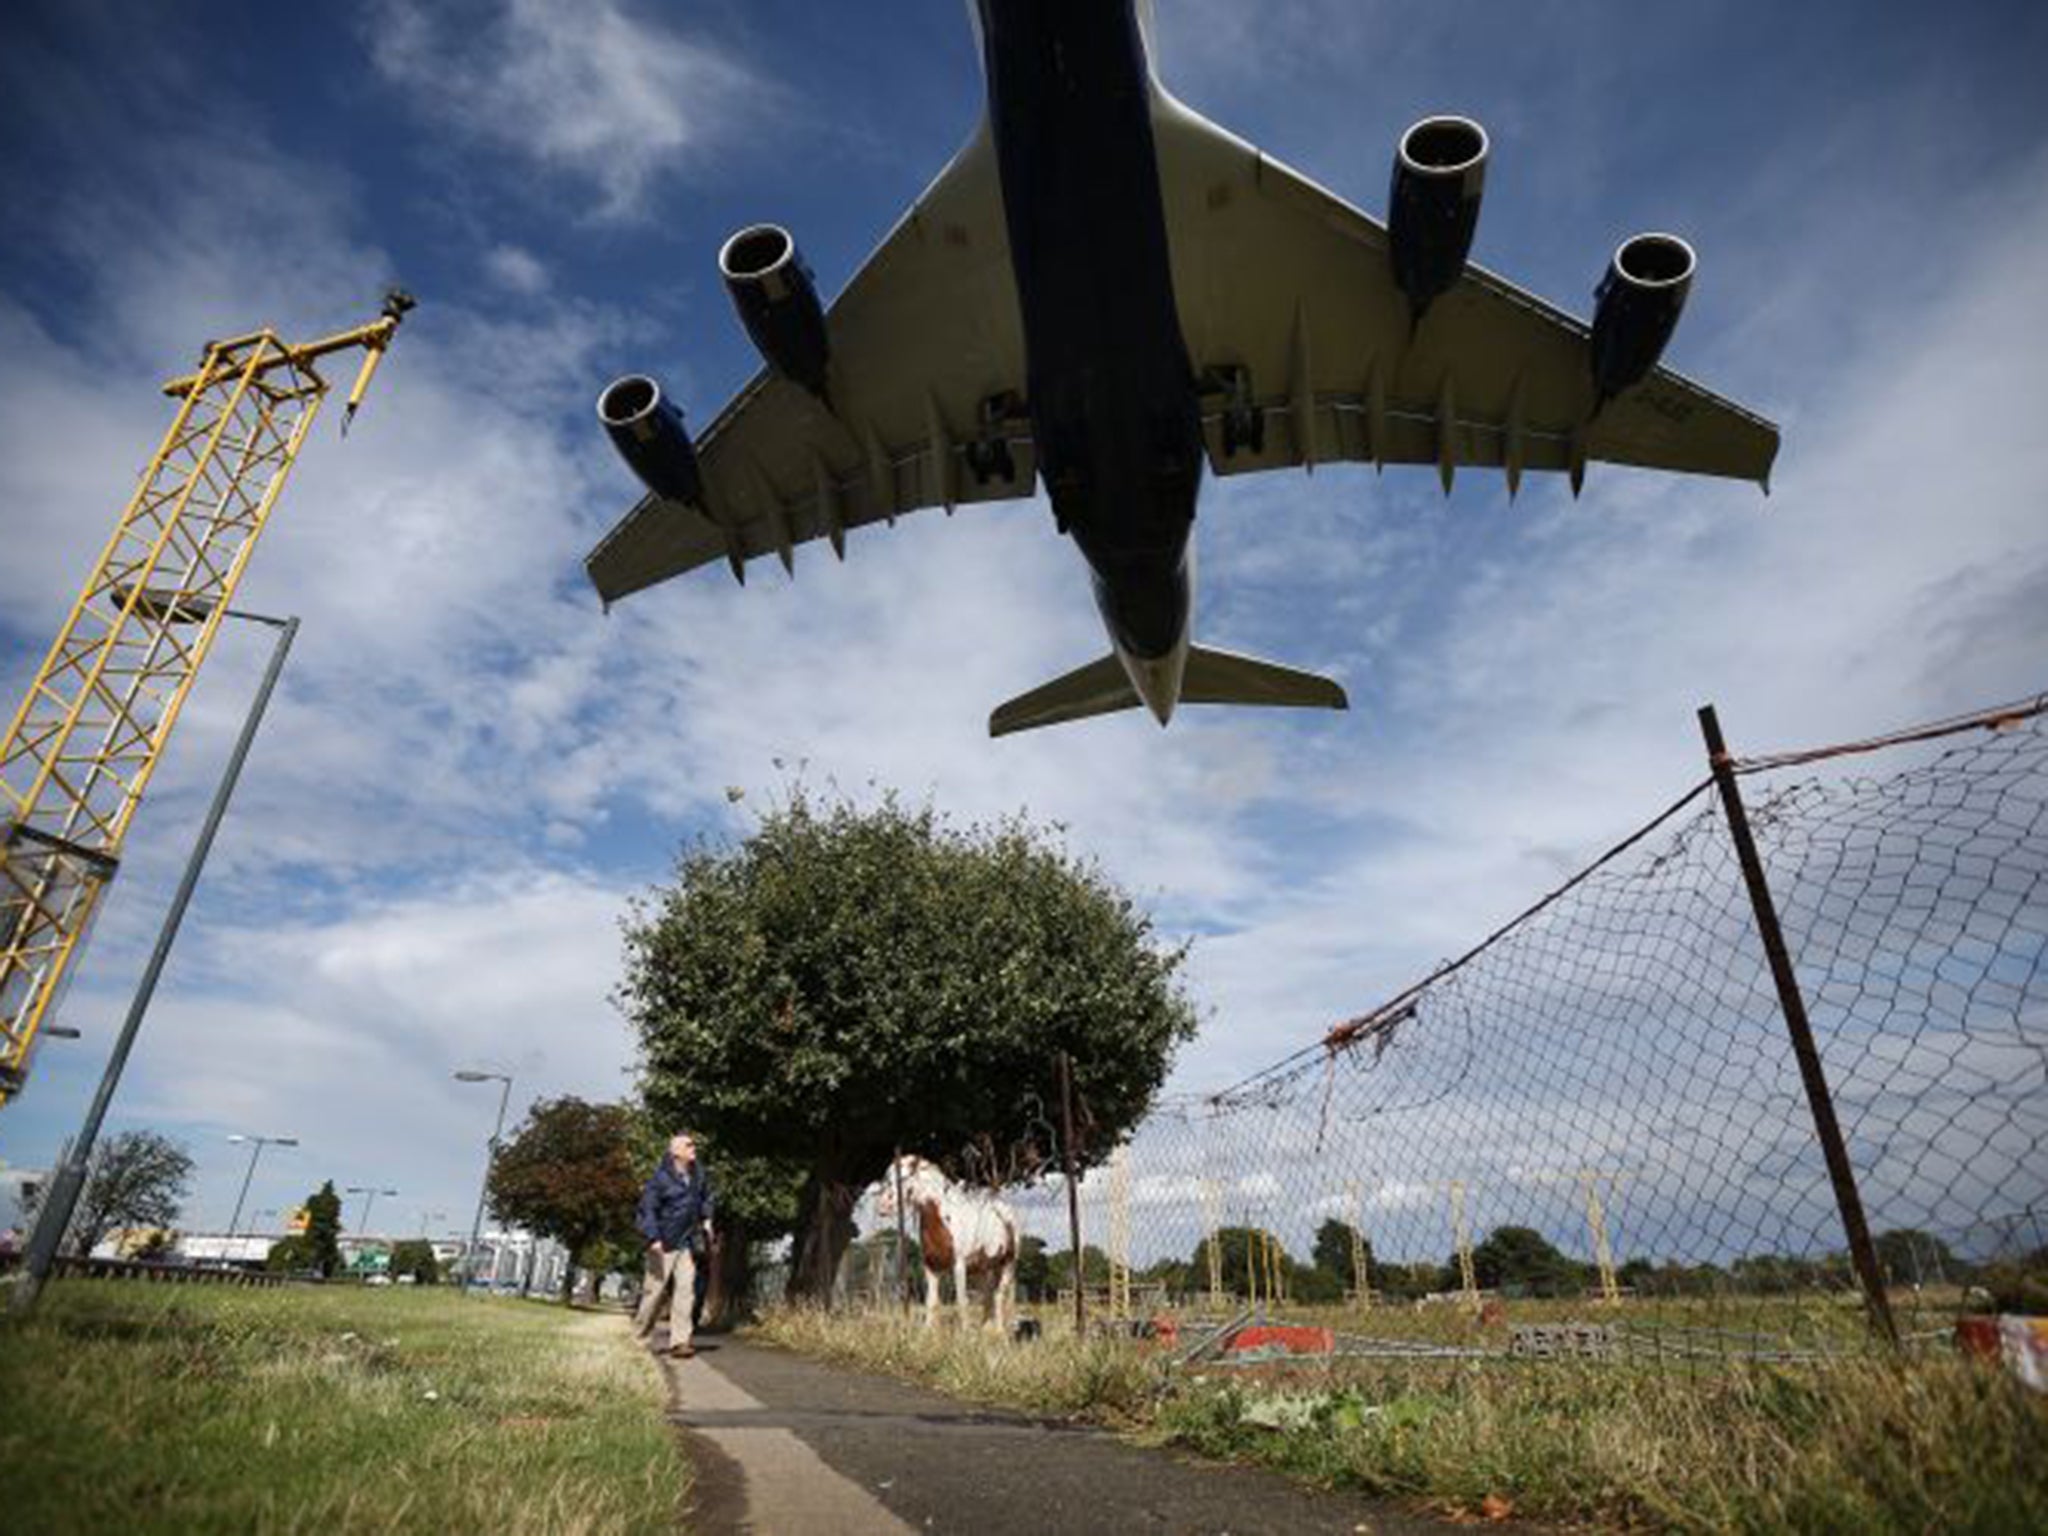 Heathrow will lose passengers to Paris, Amsterdam and Dubai